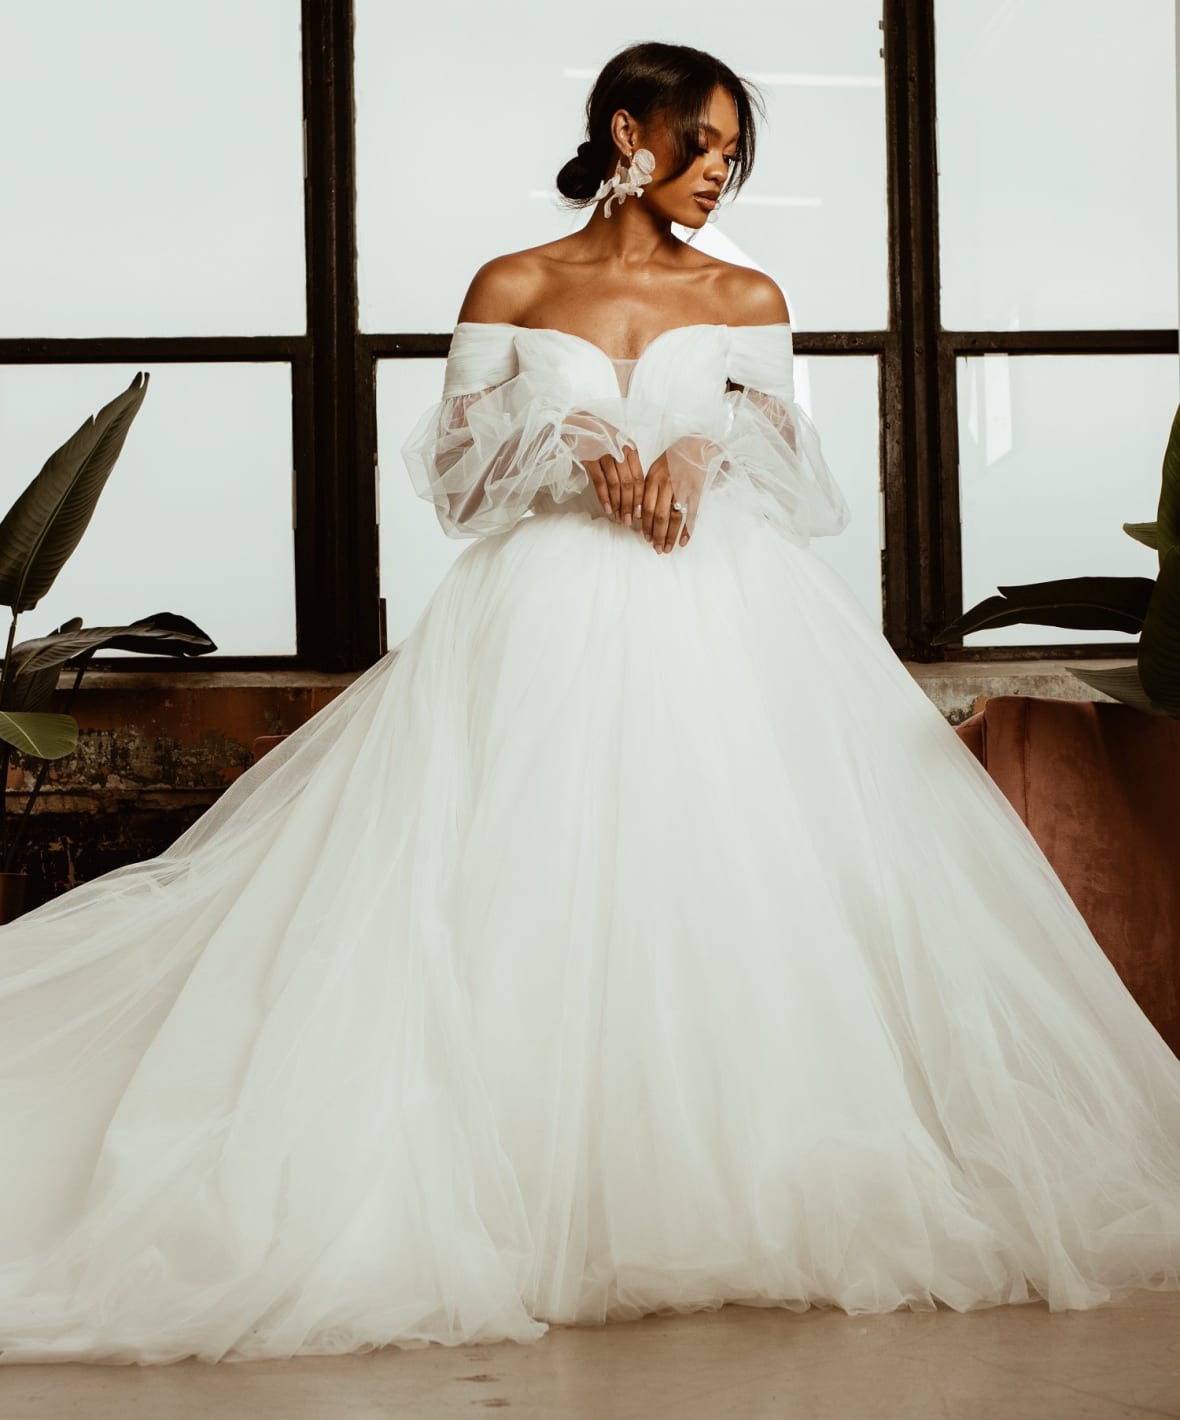 Laury Bride, Laurie Underwood, Black bride, Black bridal designer, Black wedding dress designer, Black weddings, theGrio.com